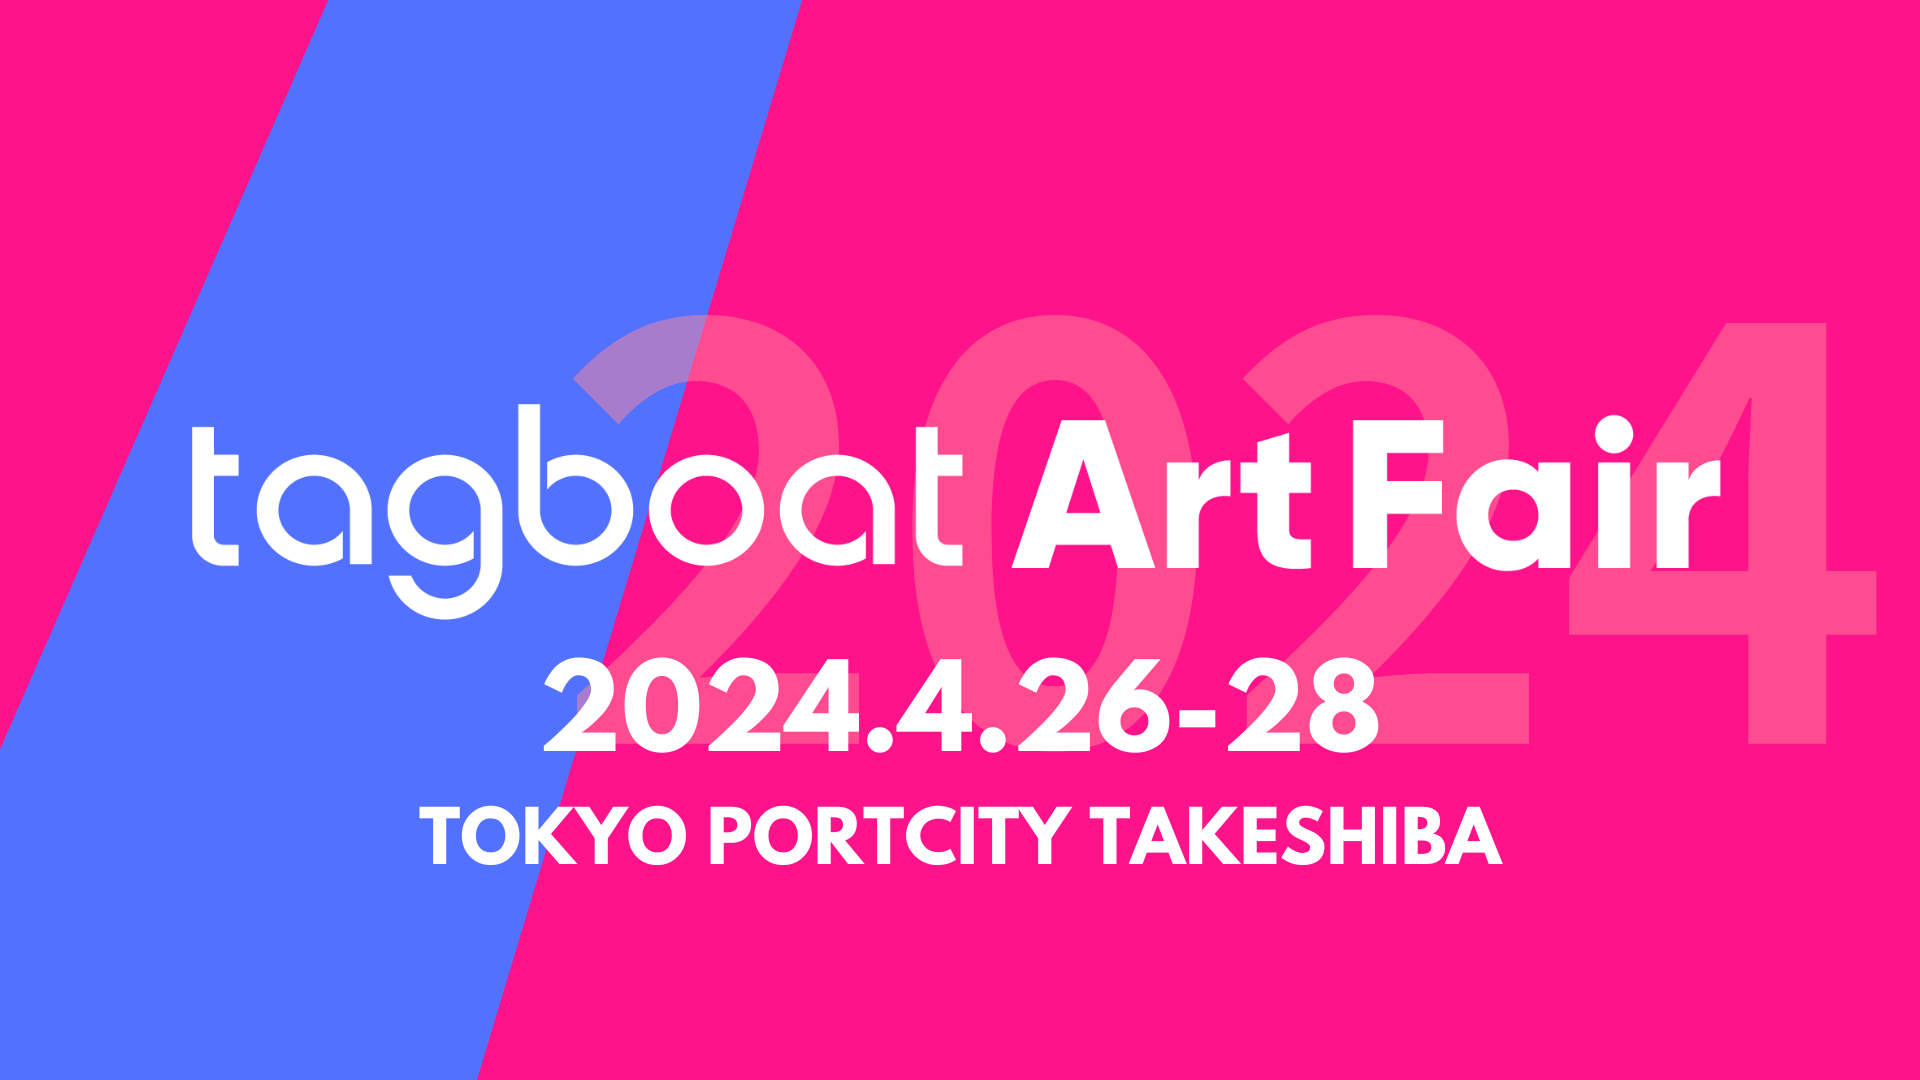 tagboat Art Fair 2024